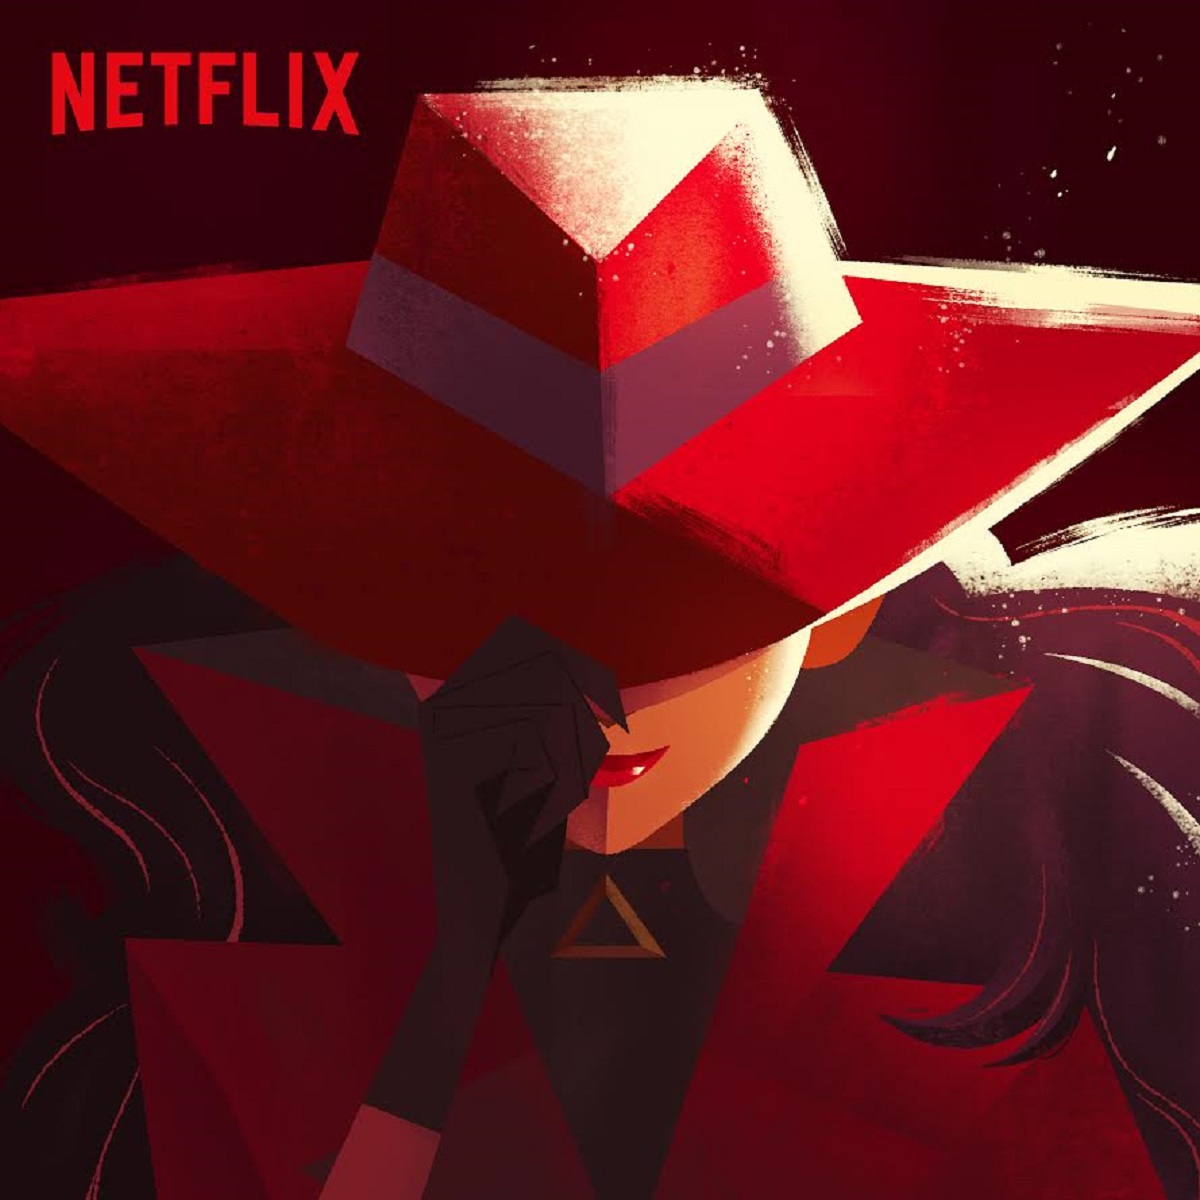 Artwork for the Carmen Sandiego animated series on Netflix